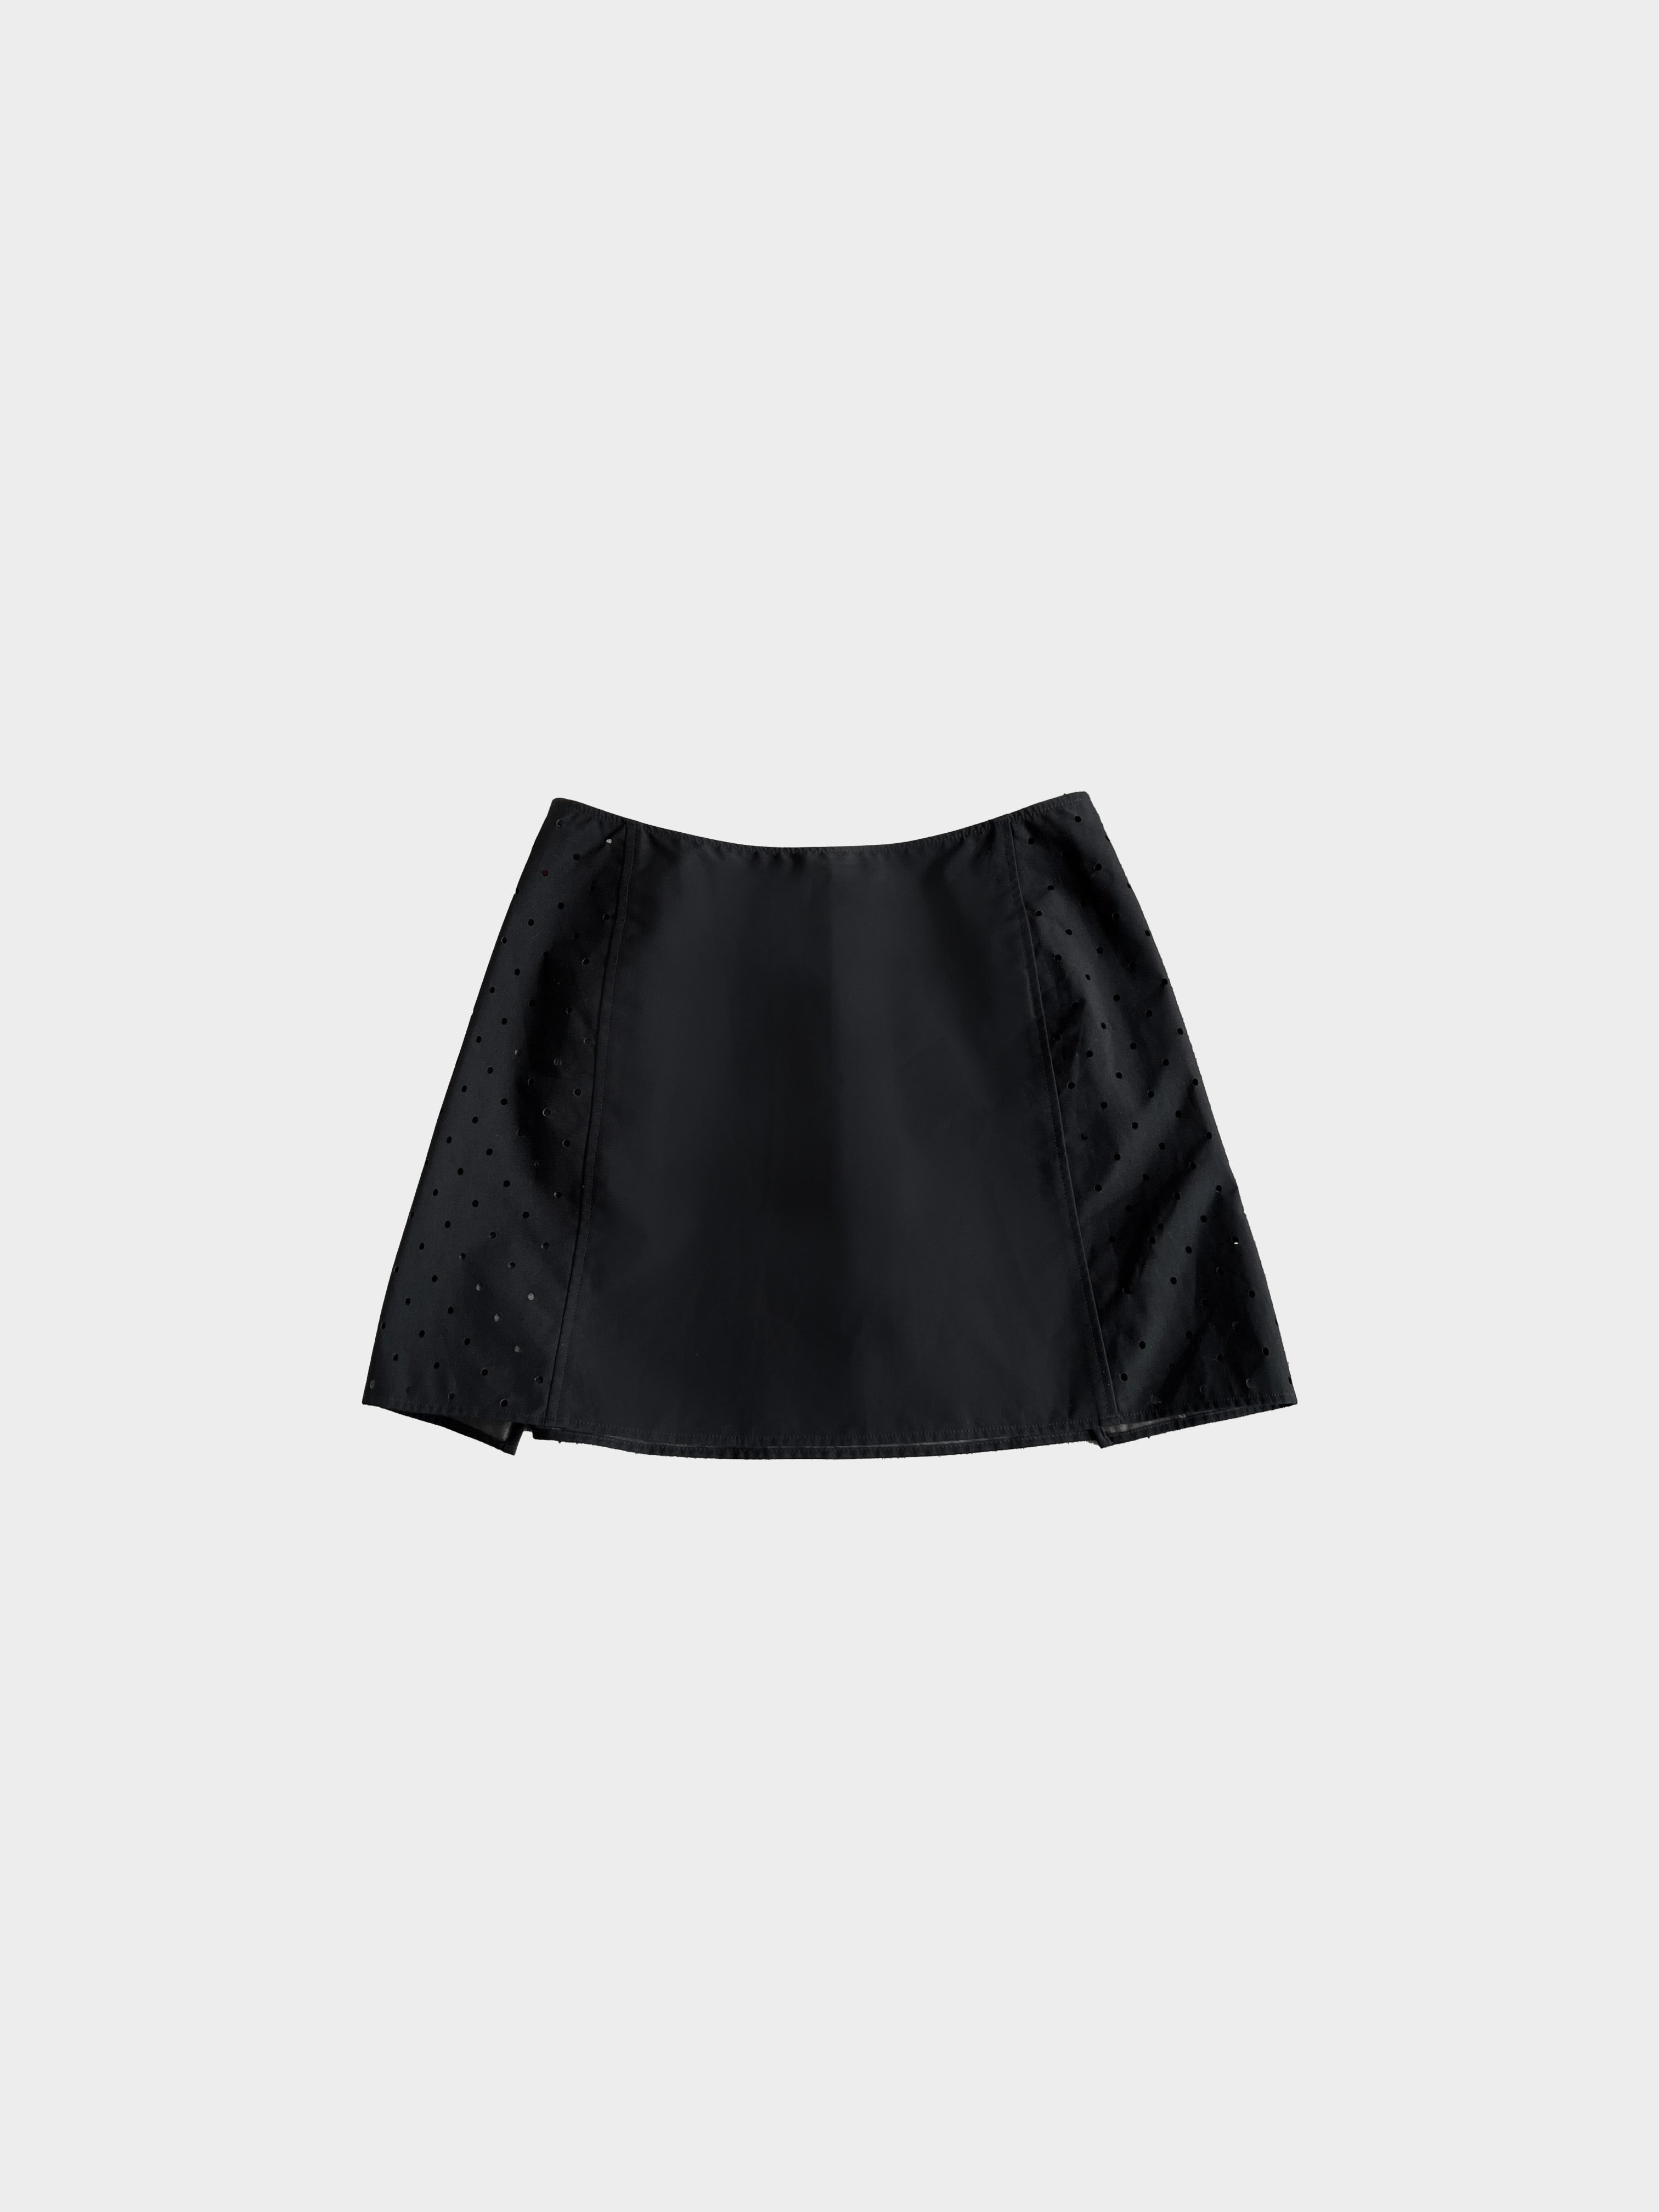 Prada SS 1999 Nylon Perforated Miniskirt · INTO